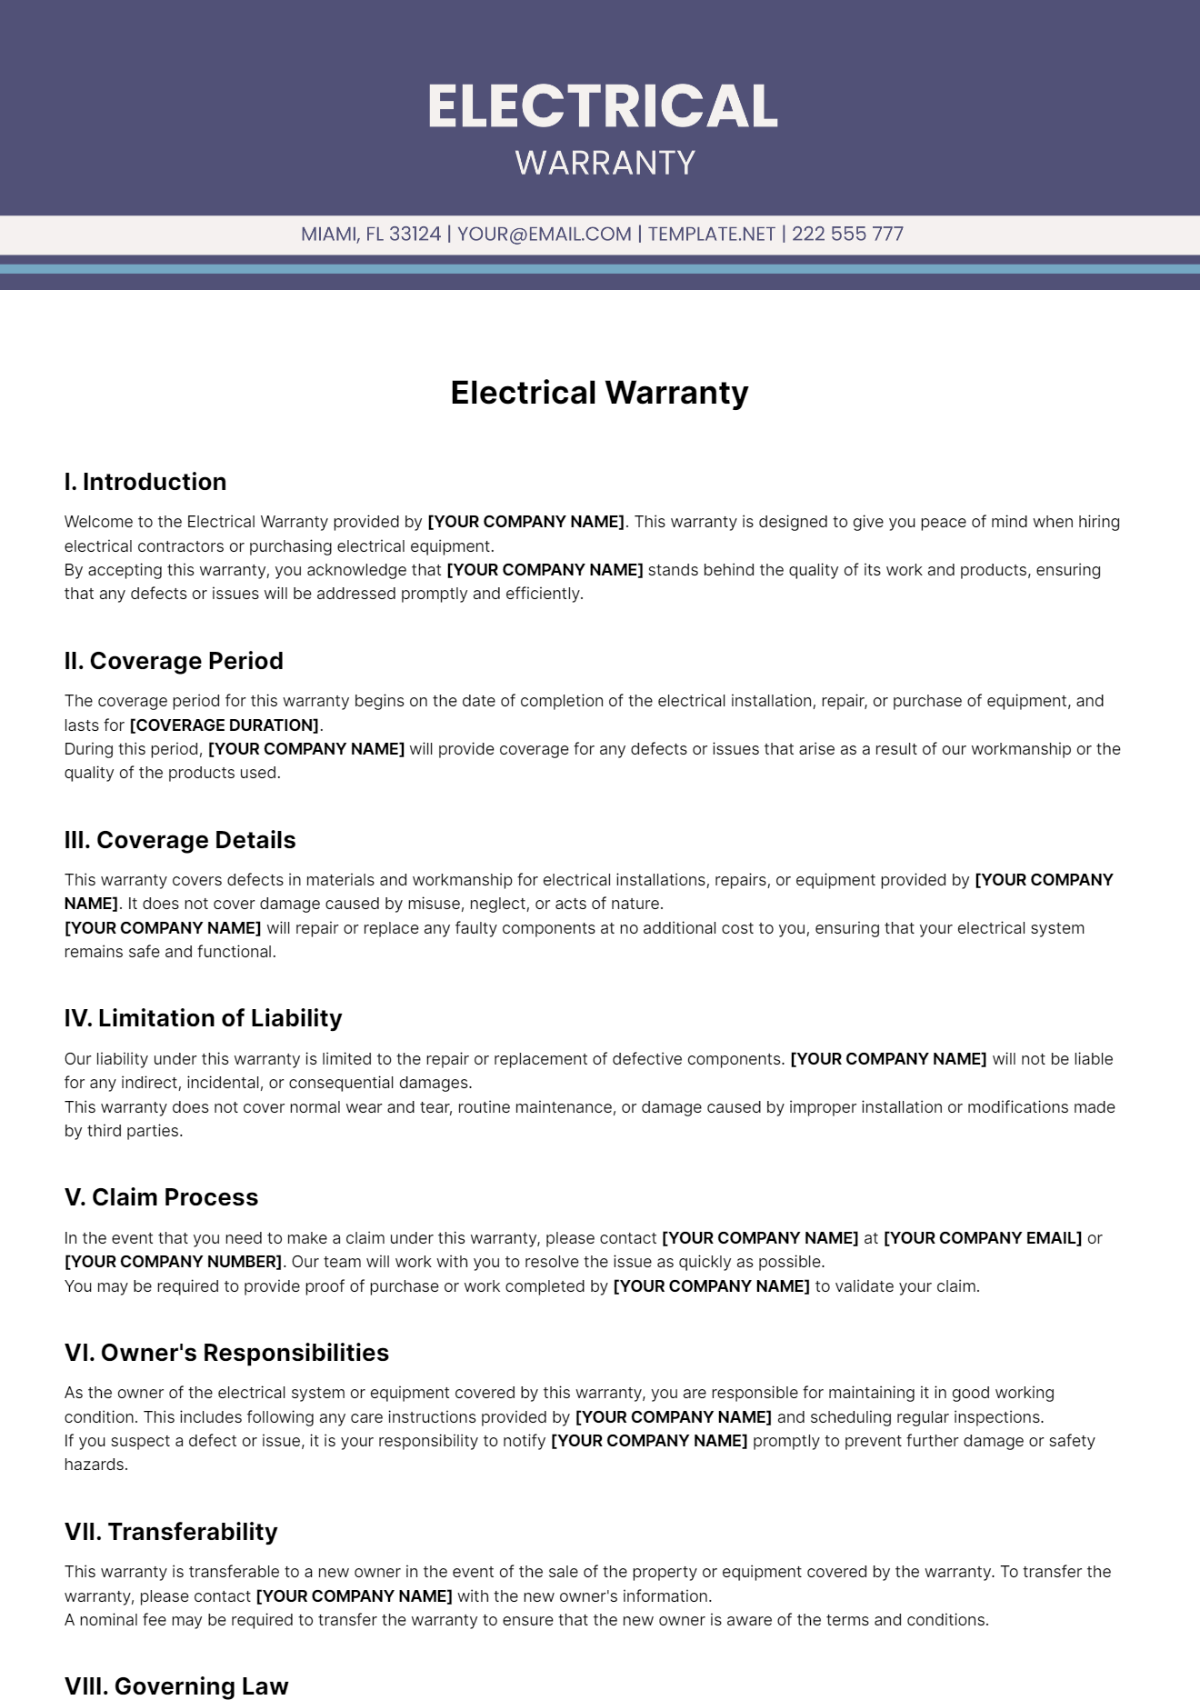 Electrical Warranty Template